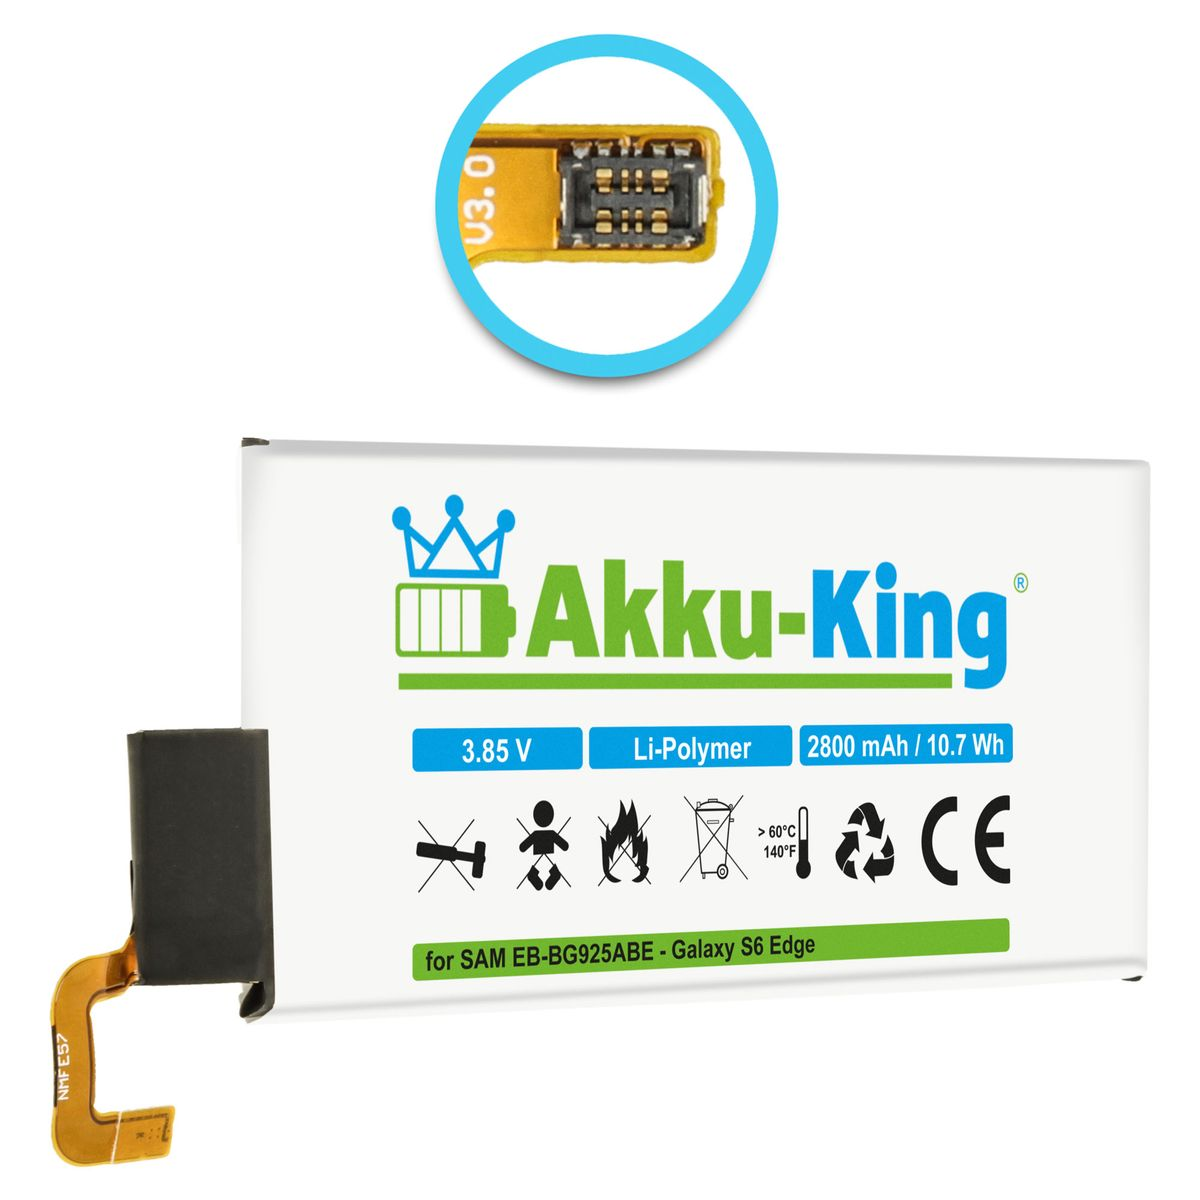 EB-BG925ABE kompatibel Handy-Akku, Samsung Volt, 3.85 AKKU-KING Li-Polymer Akku mit 2800mAh